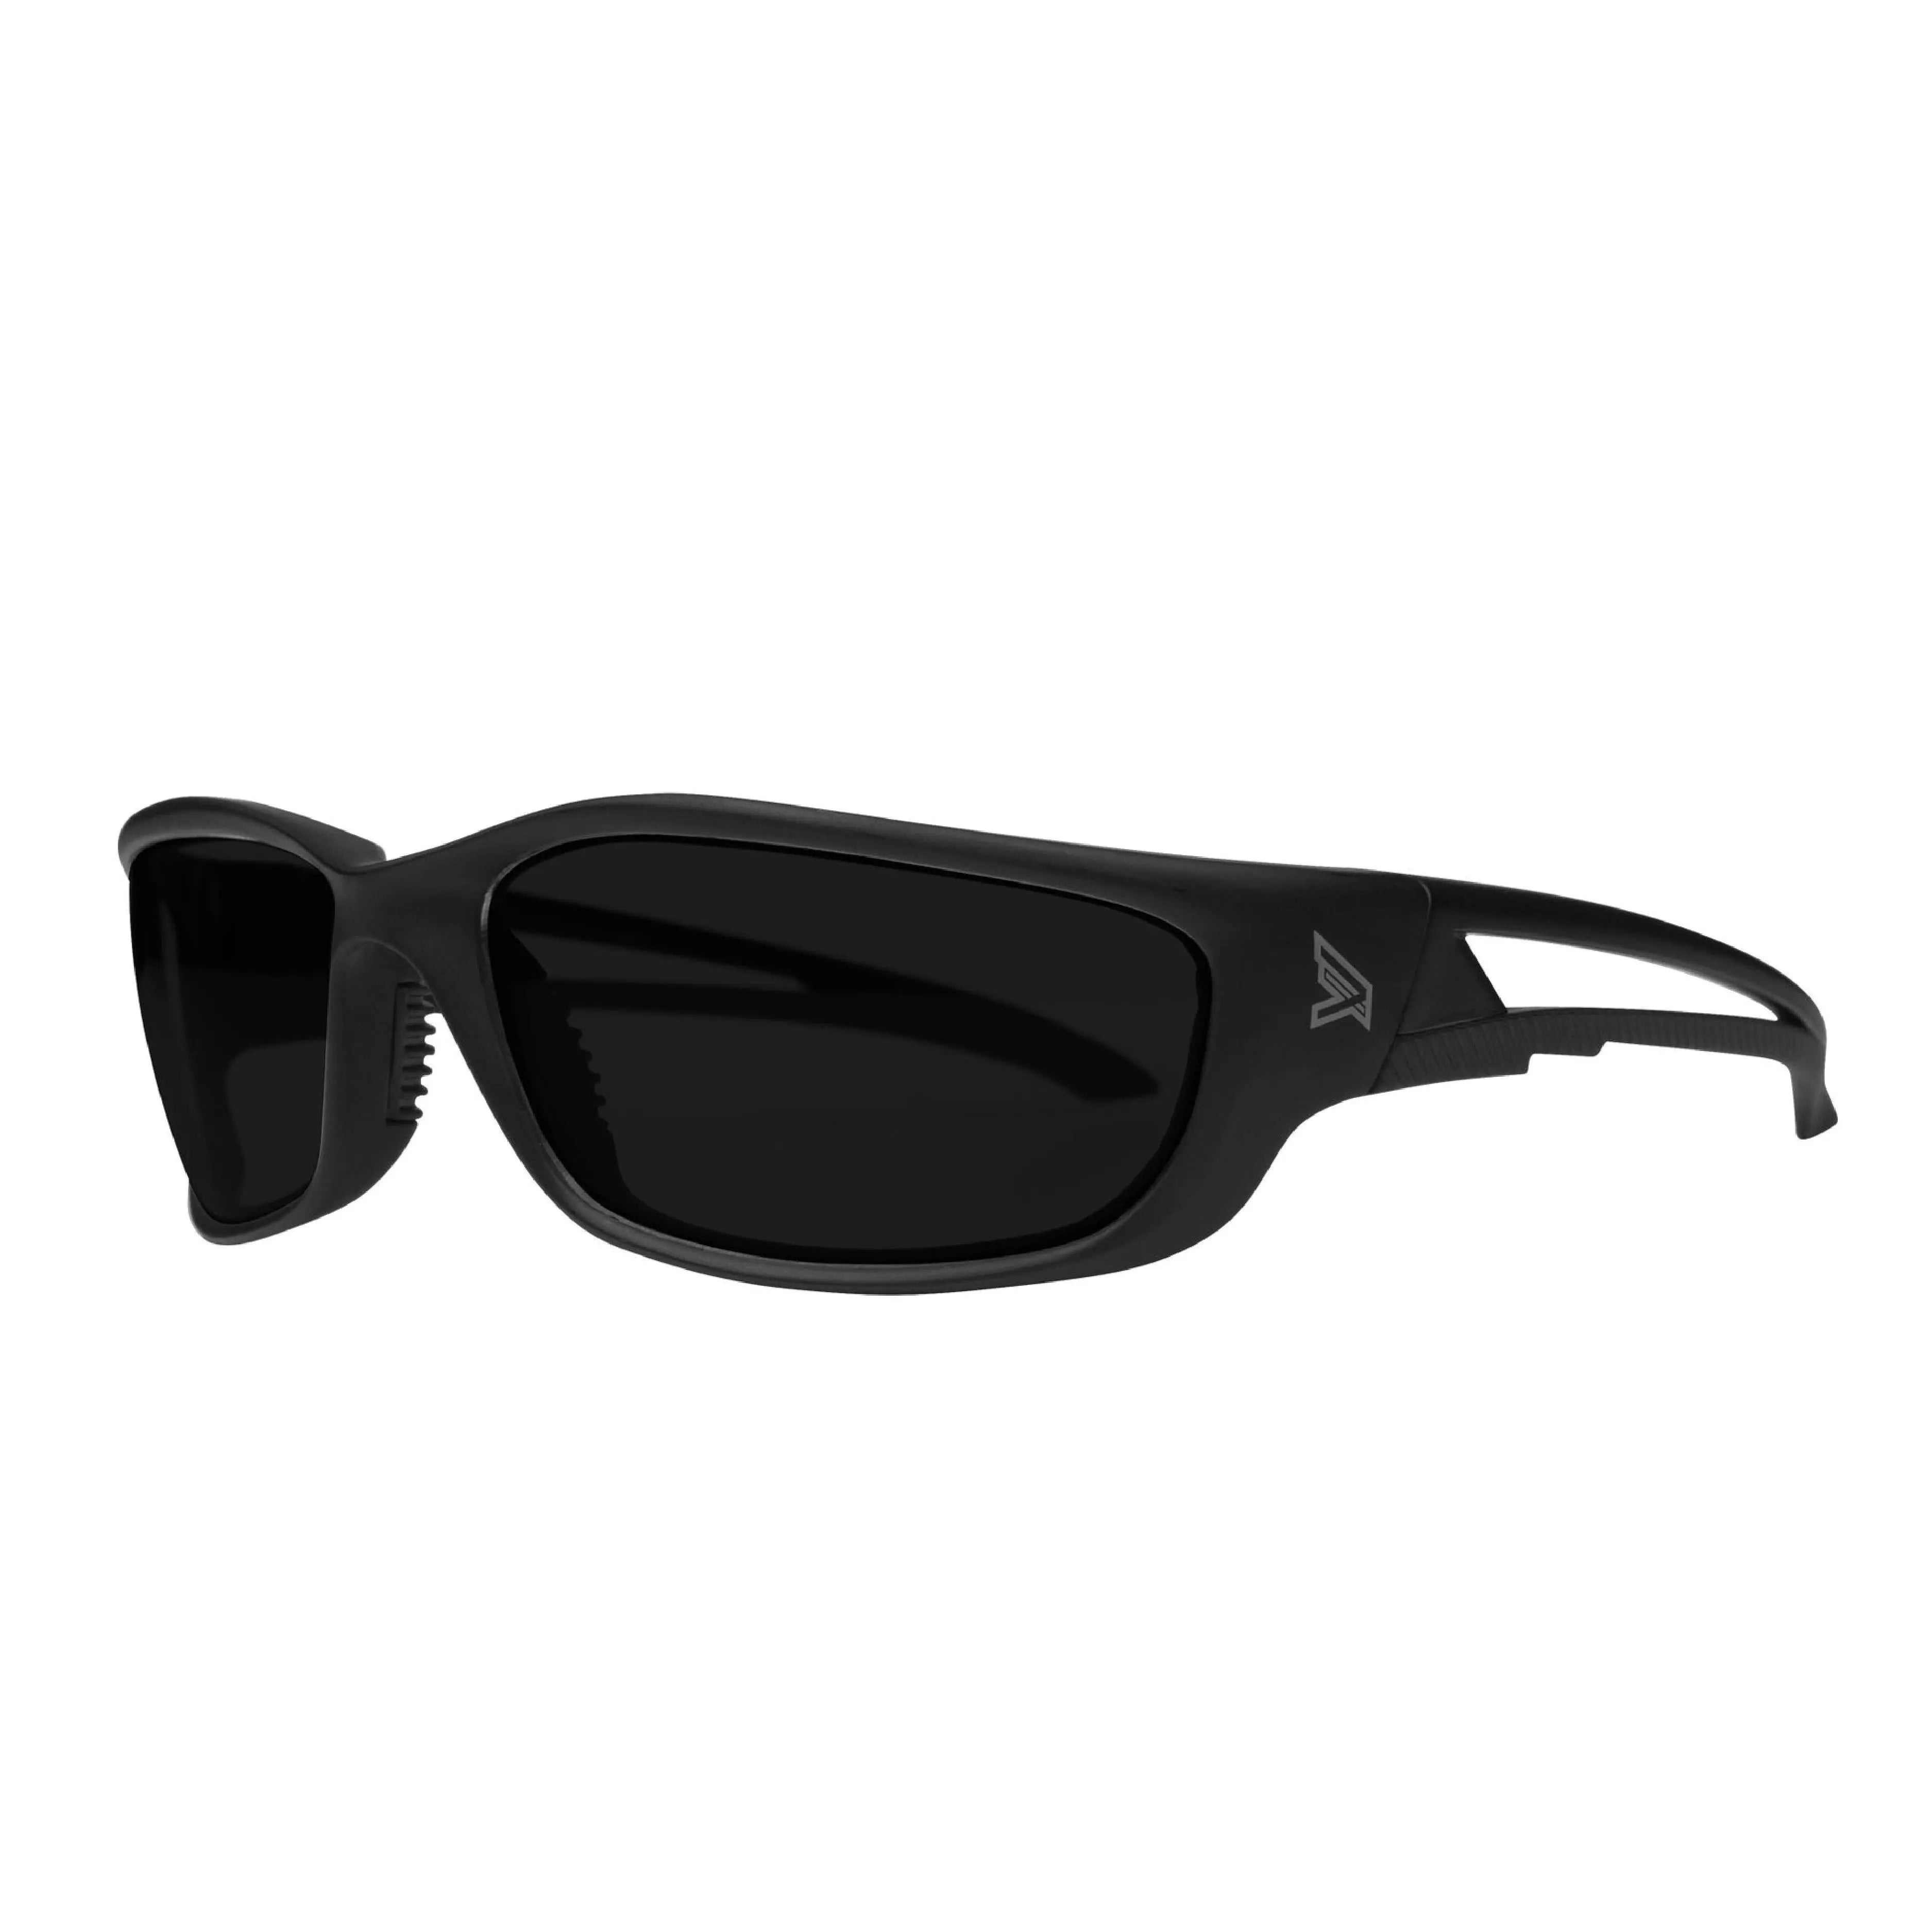 EDGE - Kazbek XL Wide Safety Glasses, Black/Smoke - Becker Safety and Supply